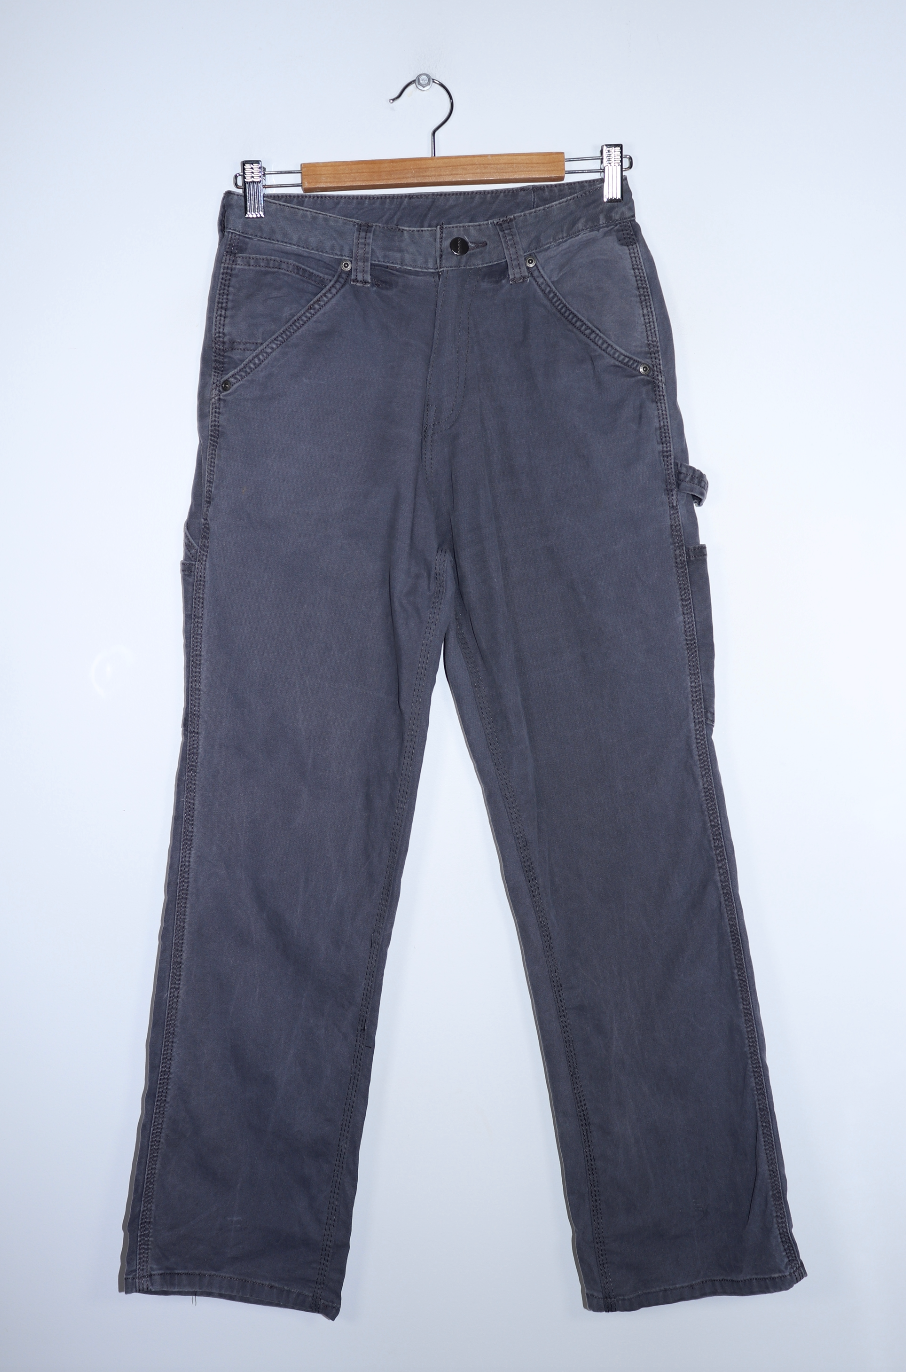 Carhartt Faded Navy / Grey Regular Carpenter Pants Size: 29